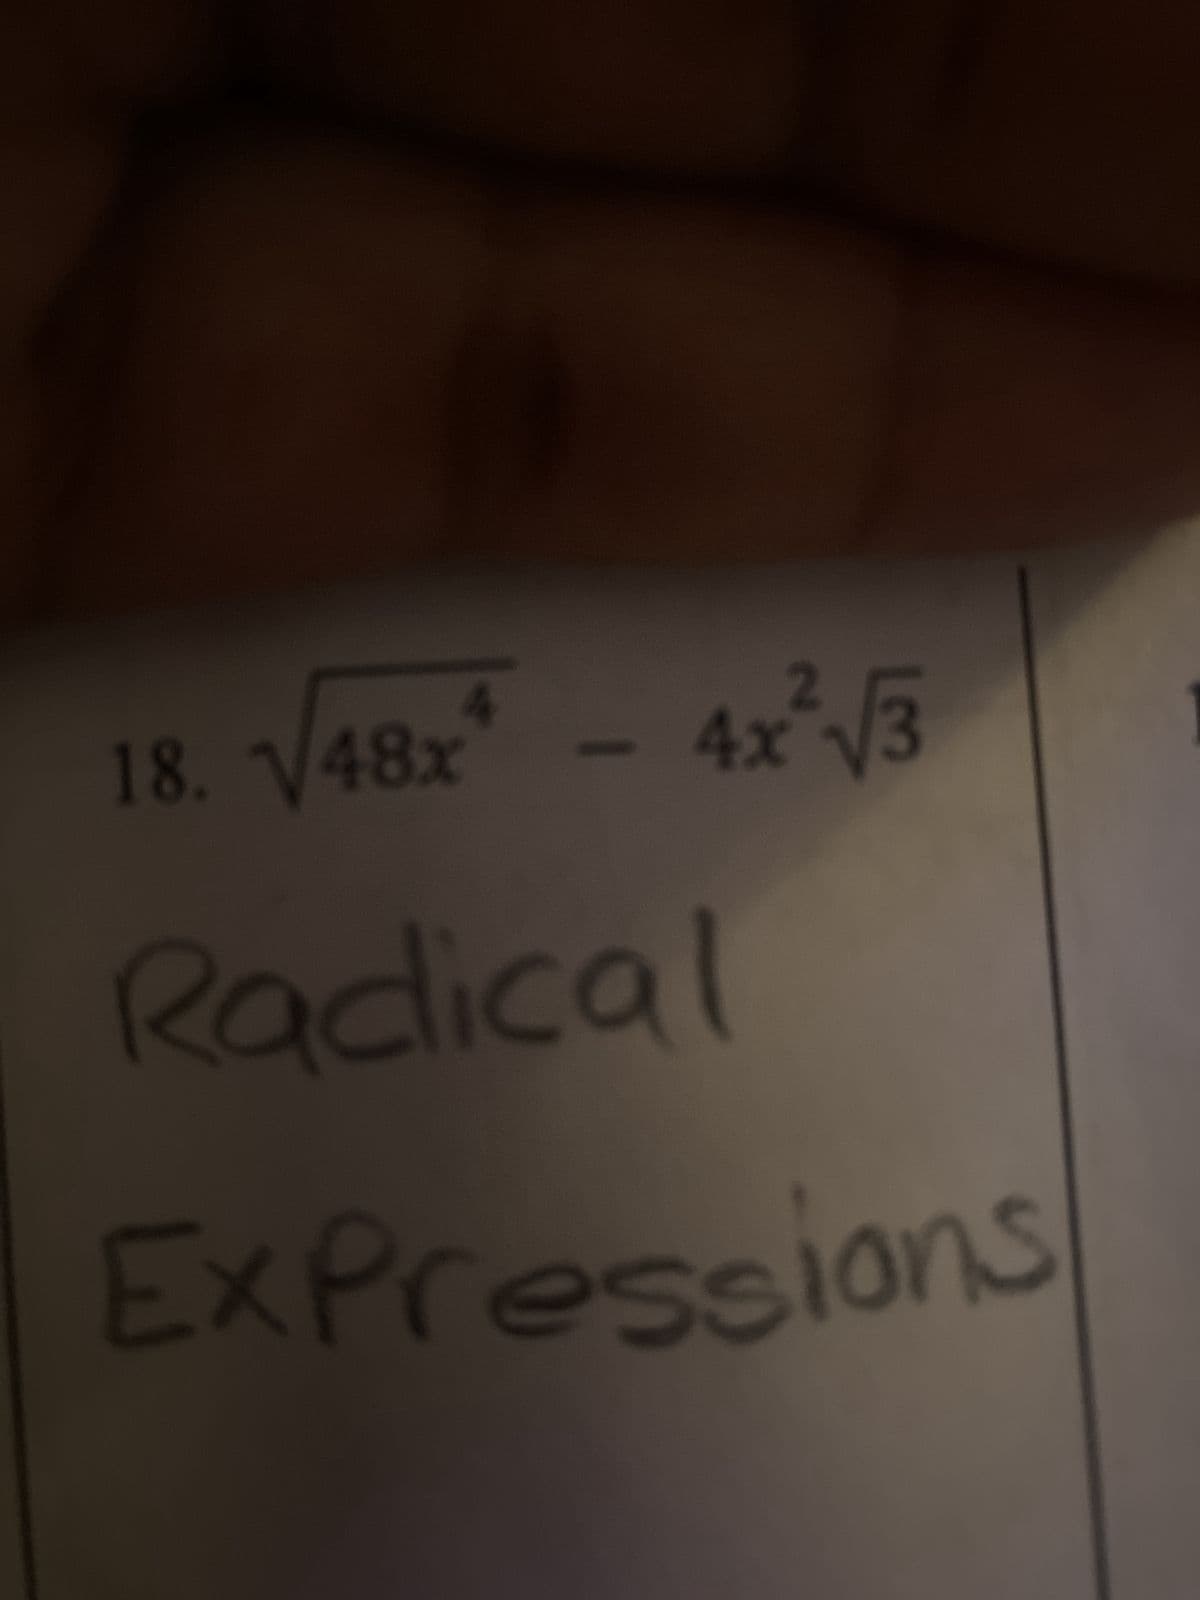 2
18. √48x² - 4x²√3
Radical
Pressions/